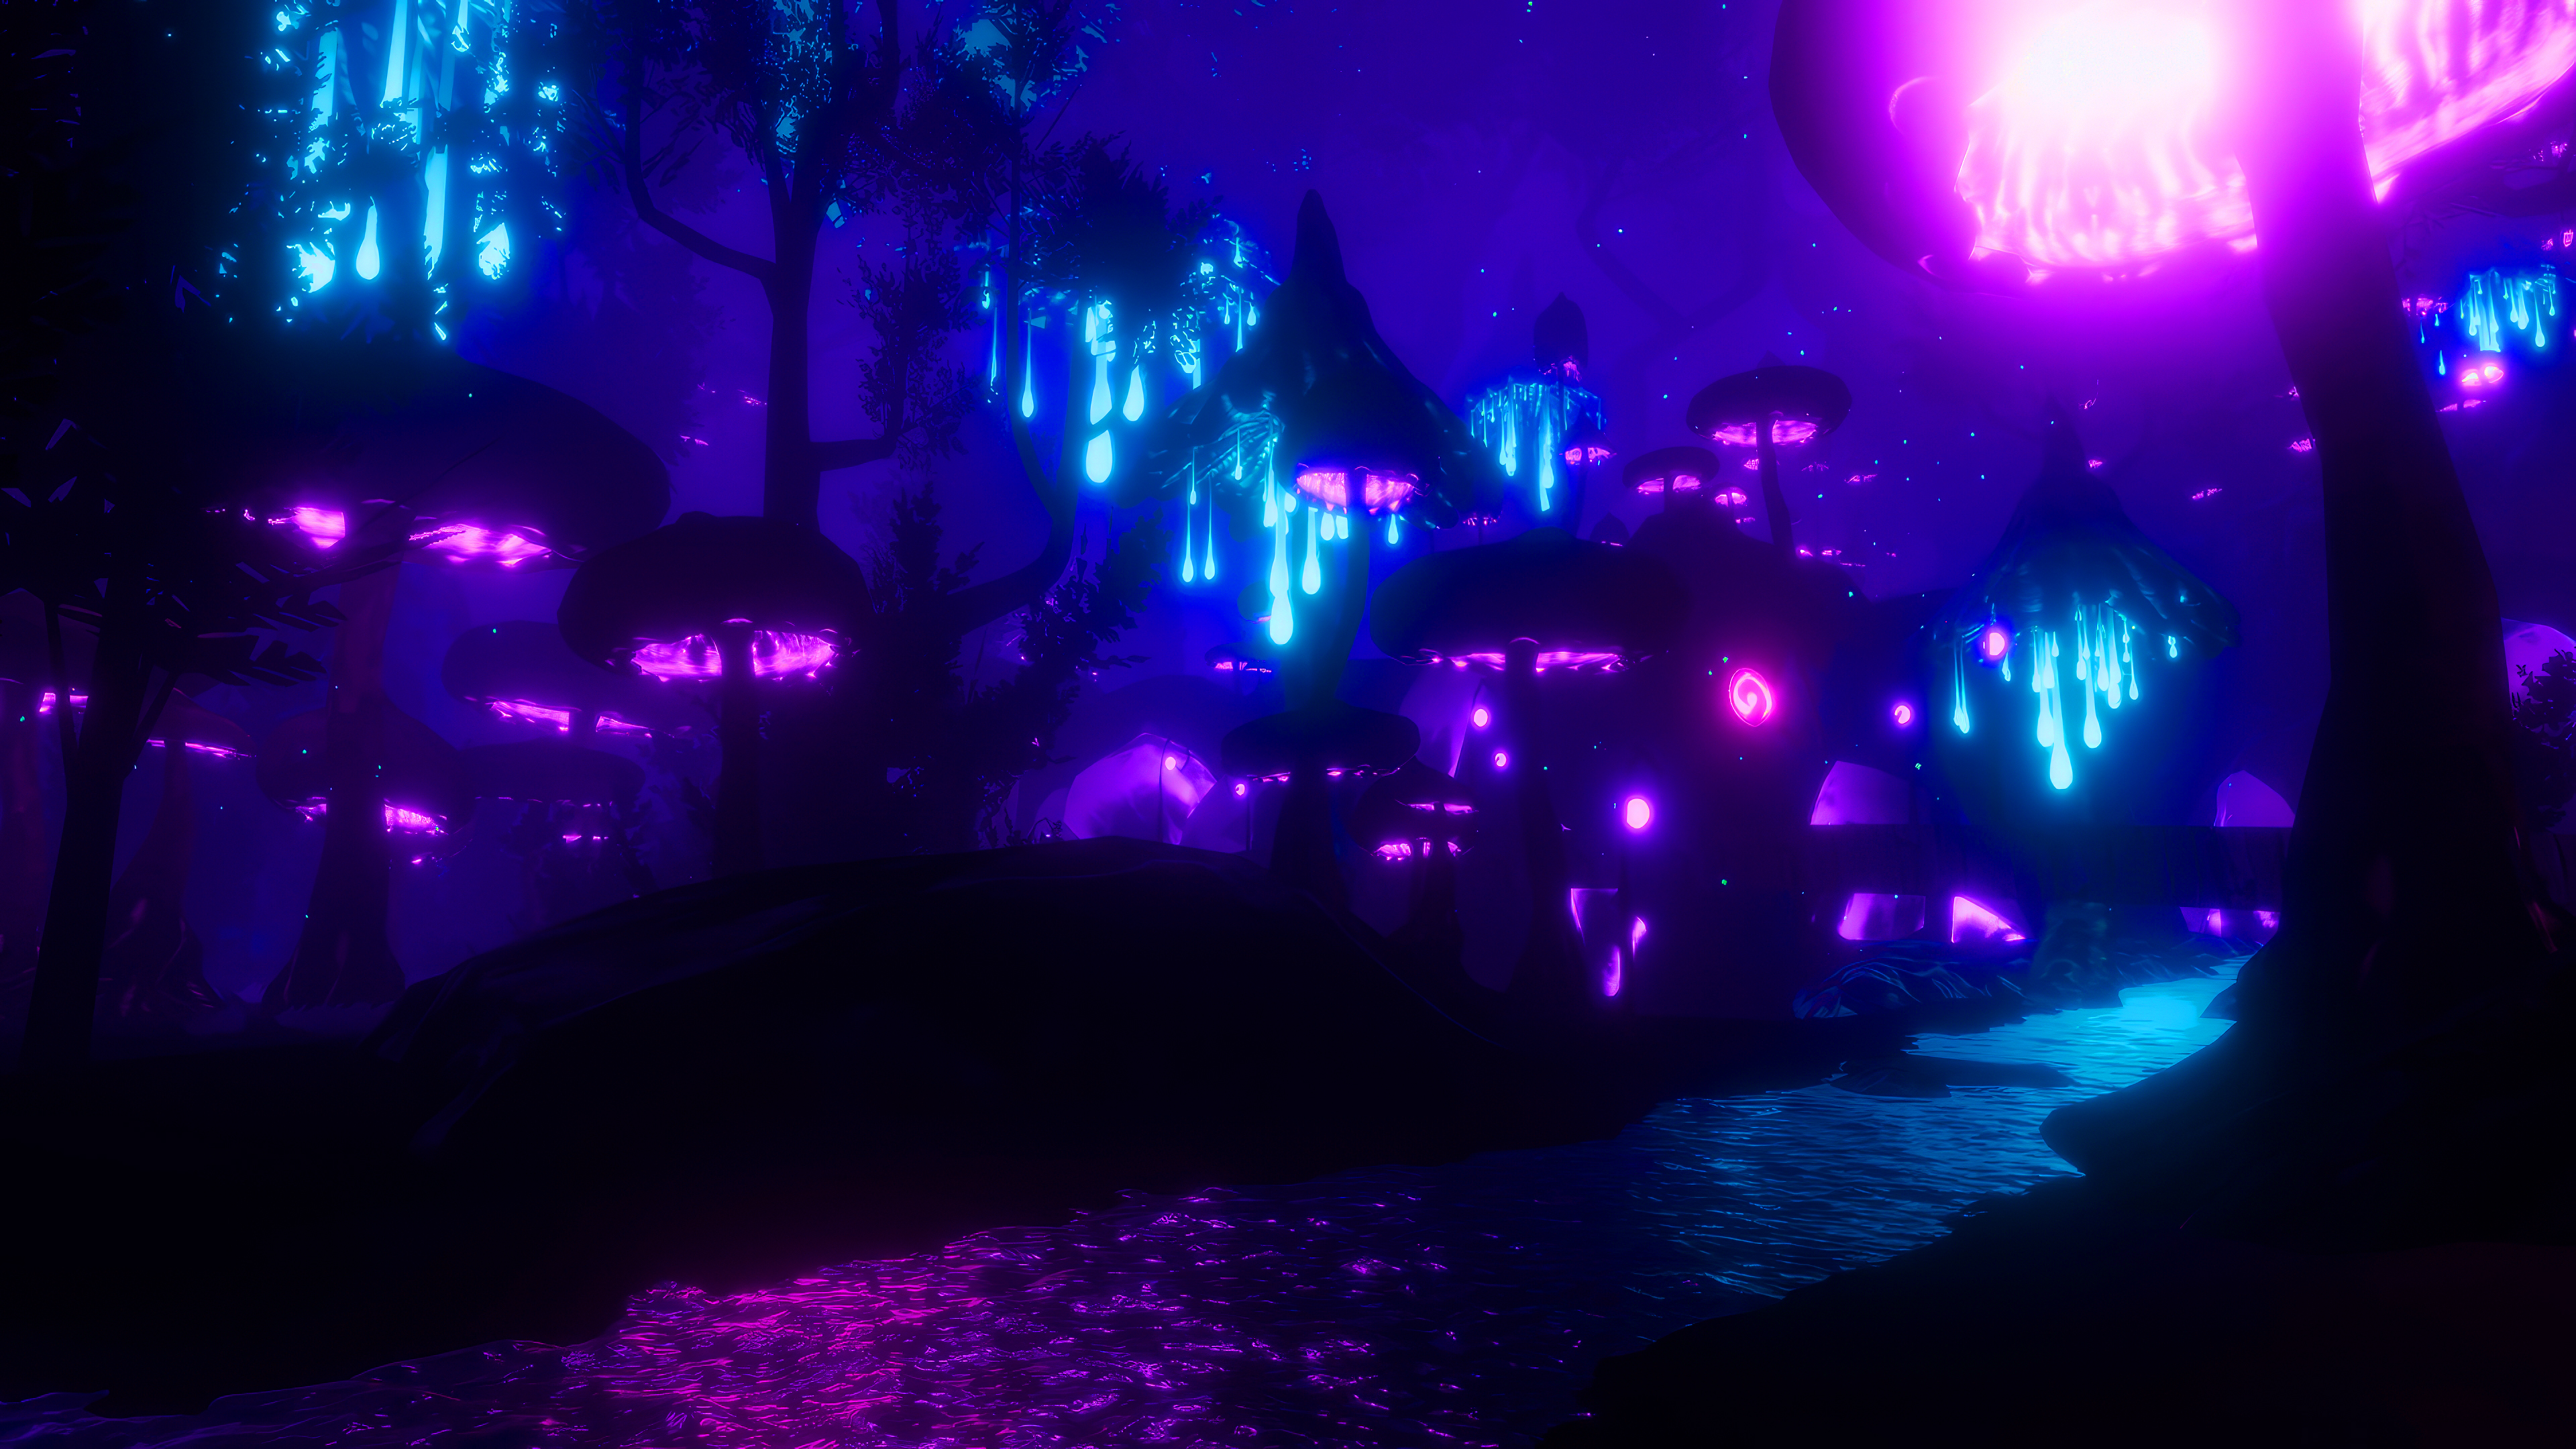 General 3840x2160 mushroom night fantasy art water blue purple neon bright turquoise sea video game art